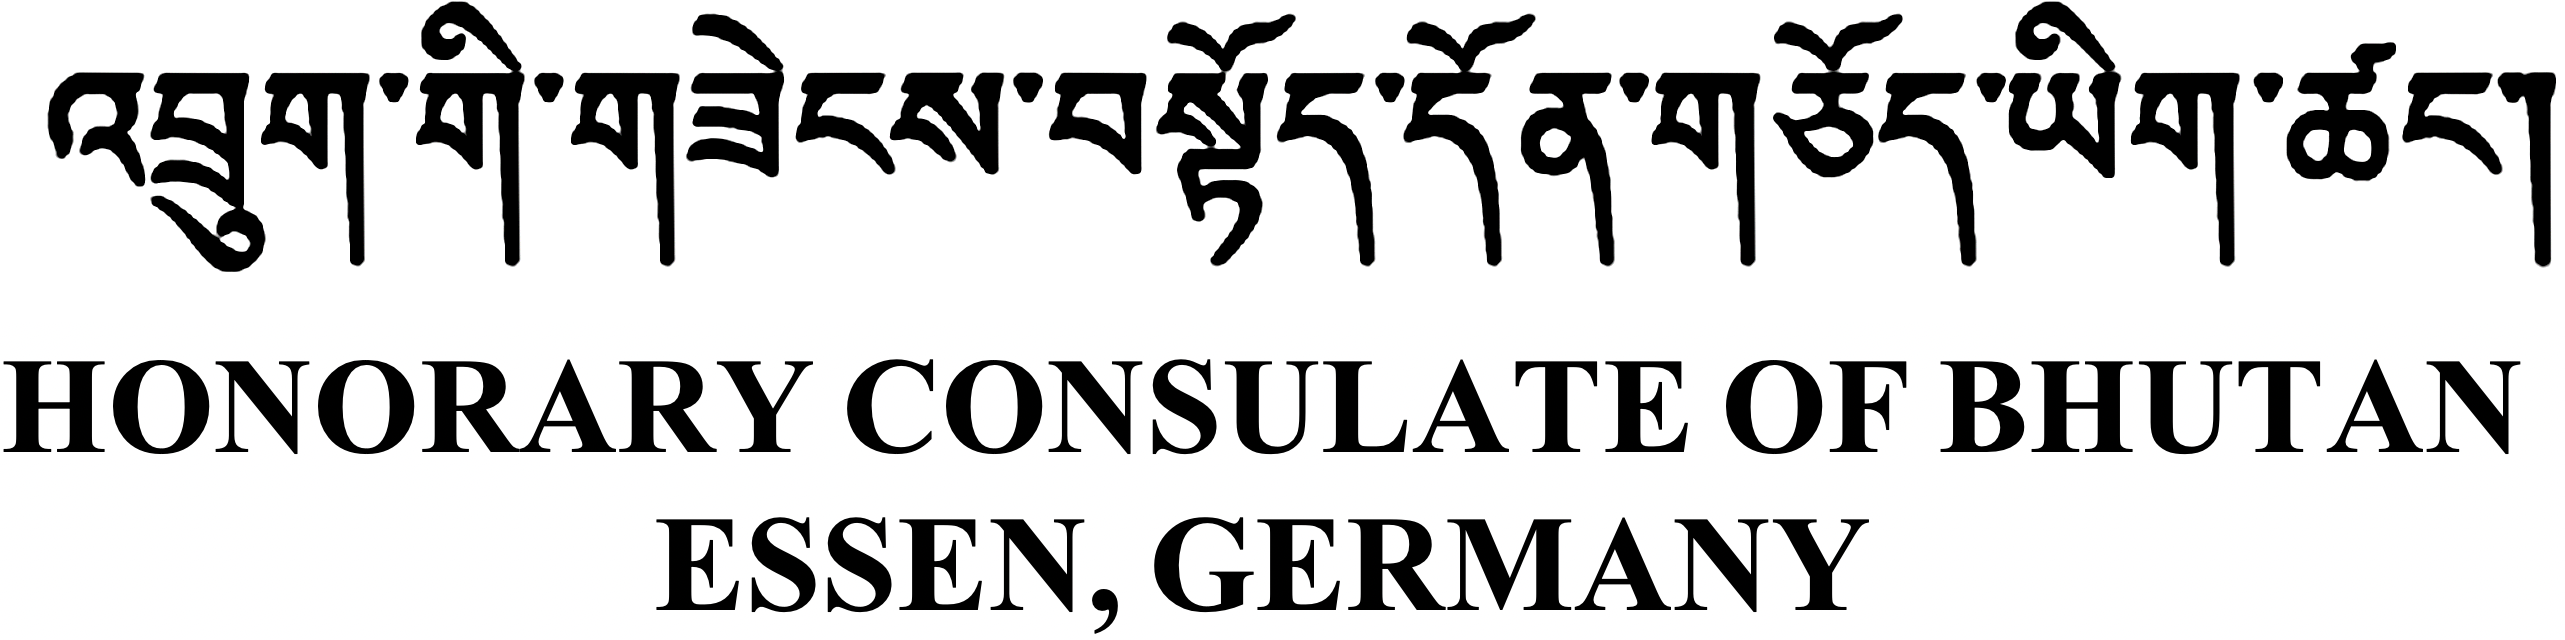 Honorary Consulate of the Kingdom of Bhutan